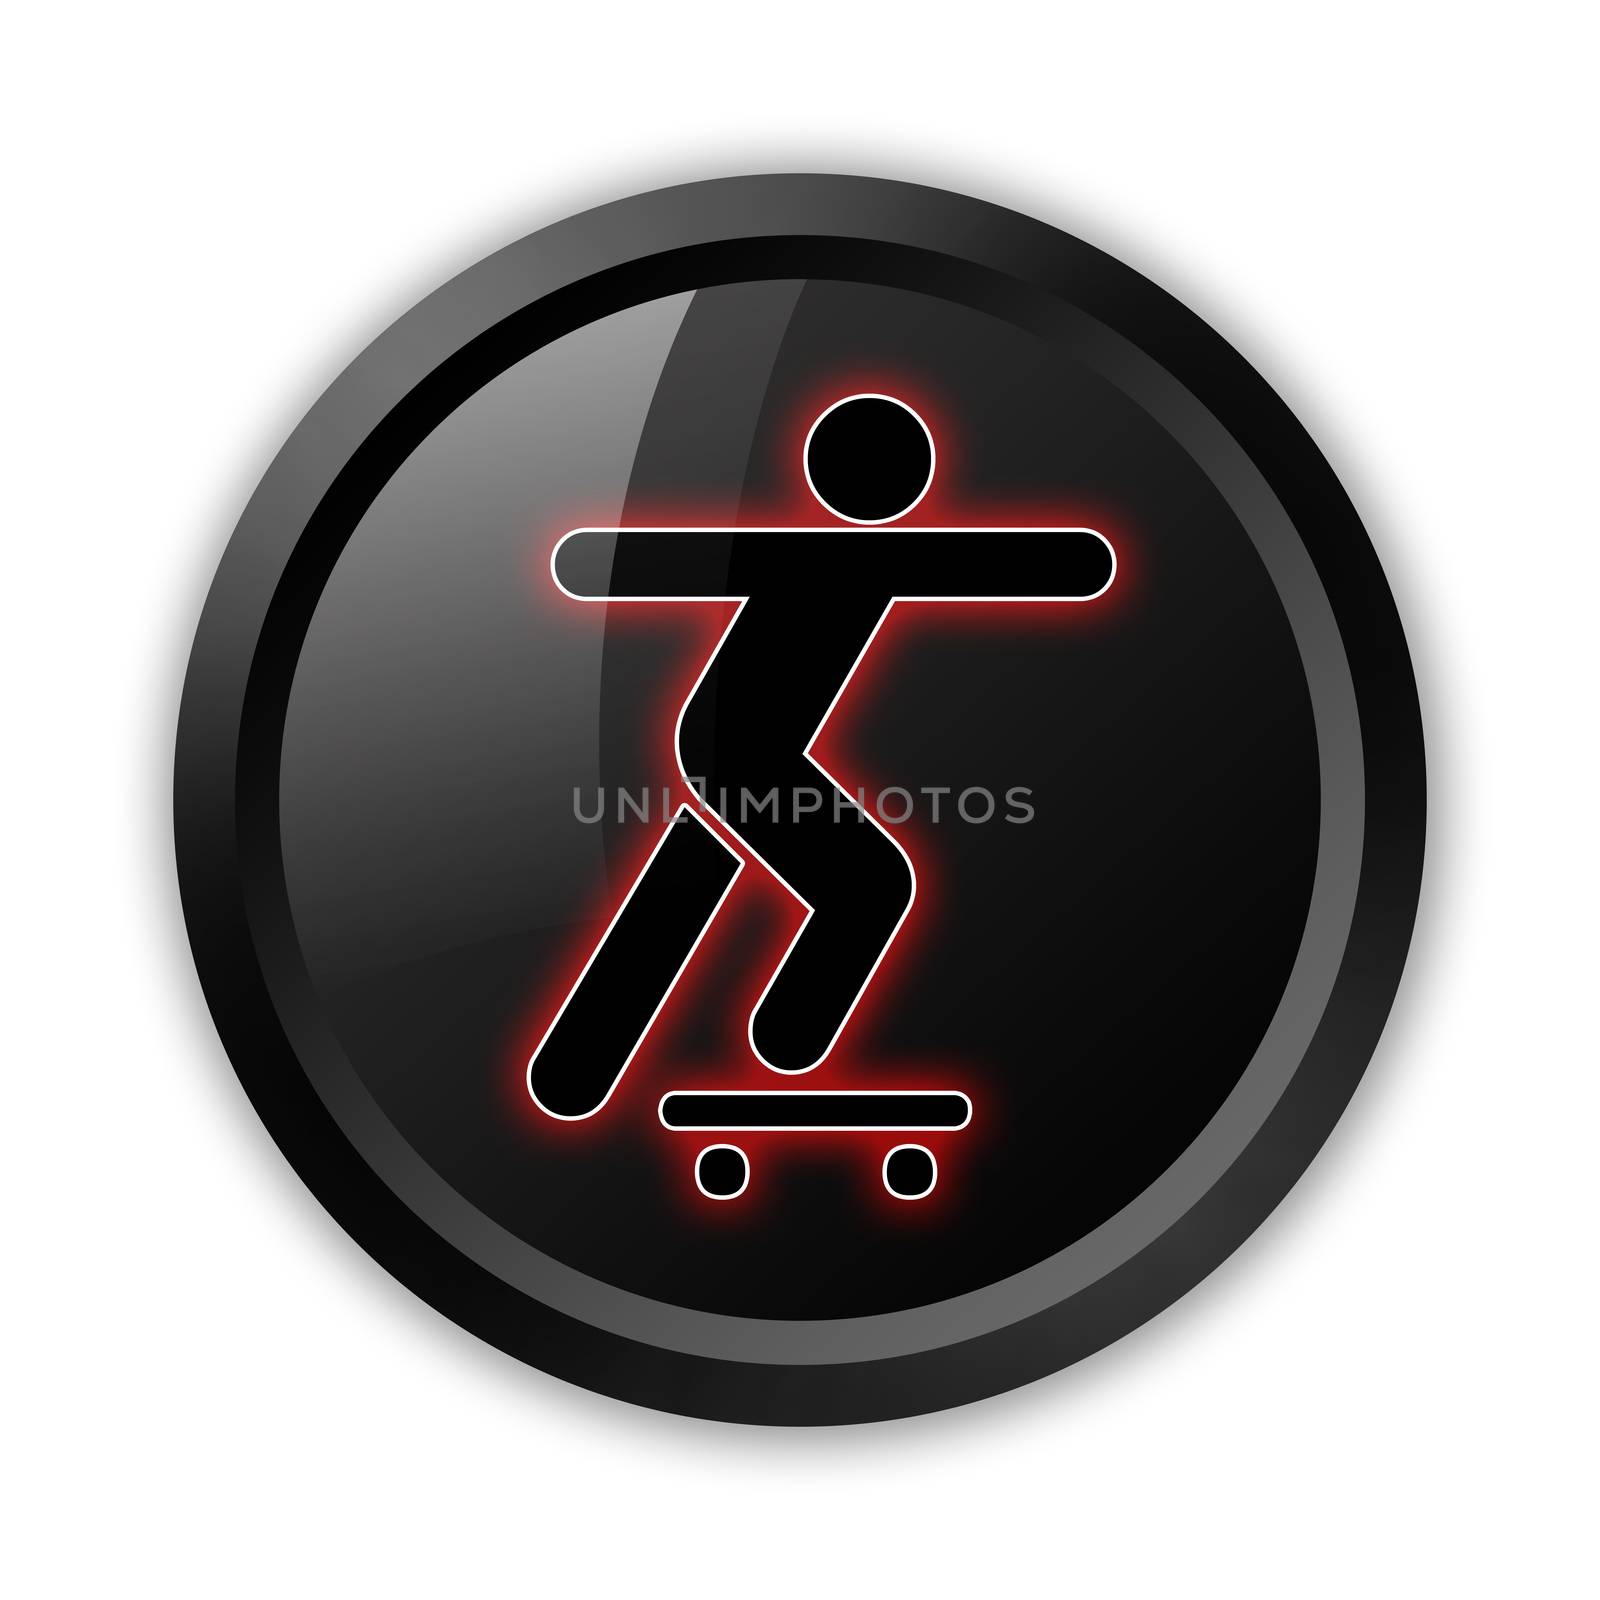 Icon, Button, Pictogram Skateboarding by mindscanner